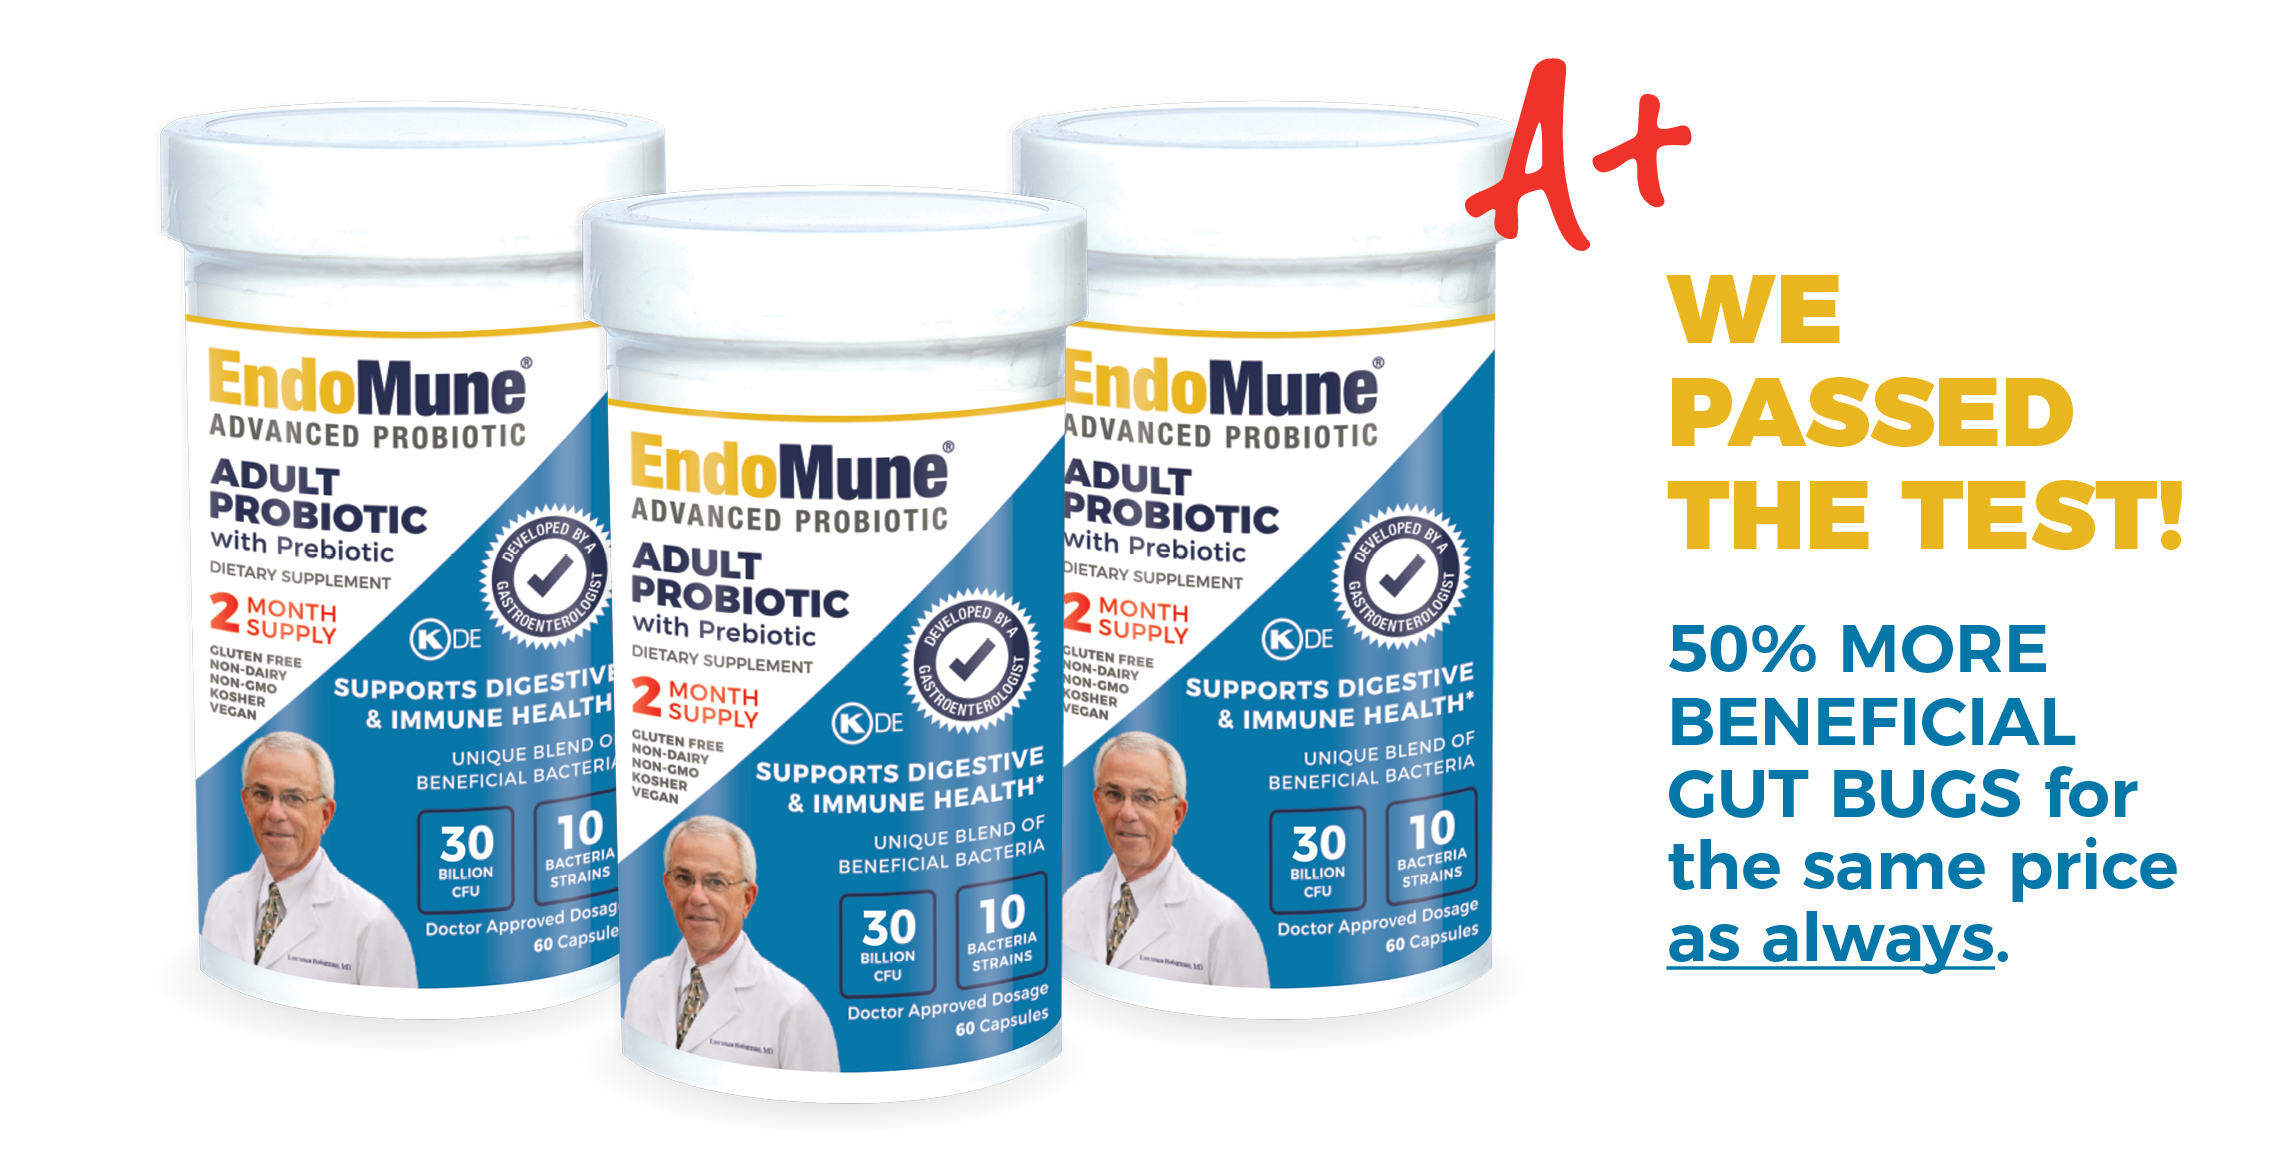 EndoMune Advanced Adult Probiotic passed the test! Image of bottles.